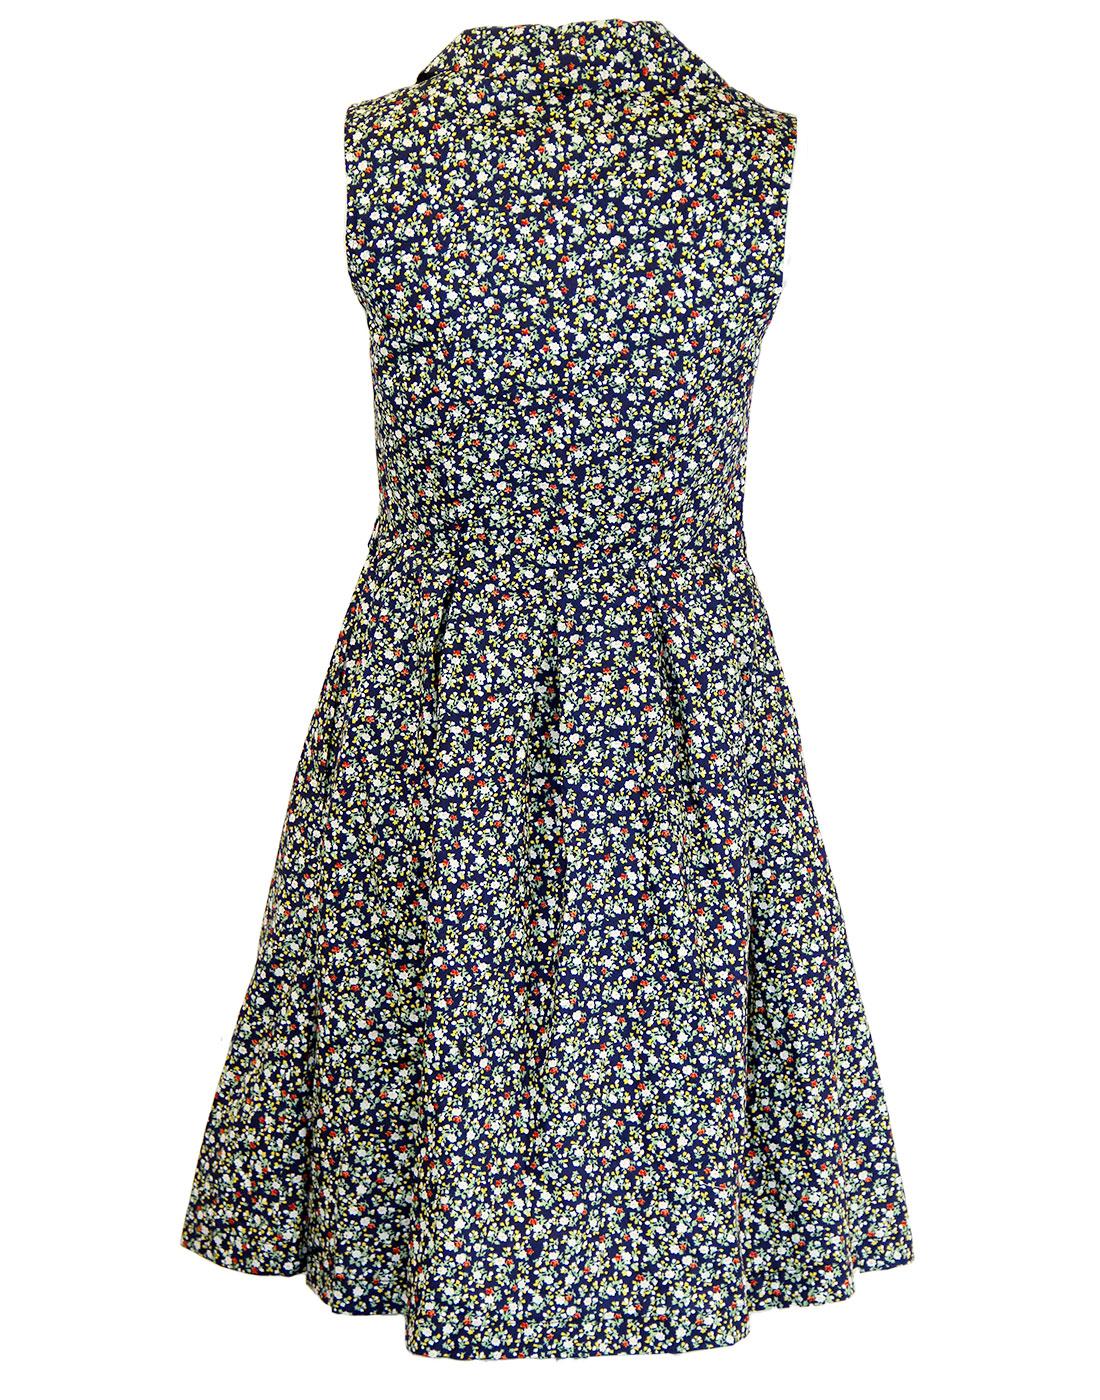 eUKalyptus Nancy Retro 1950s Floral Vintage Shirt Dress in Navy